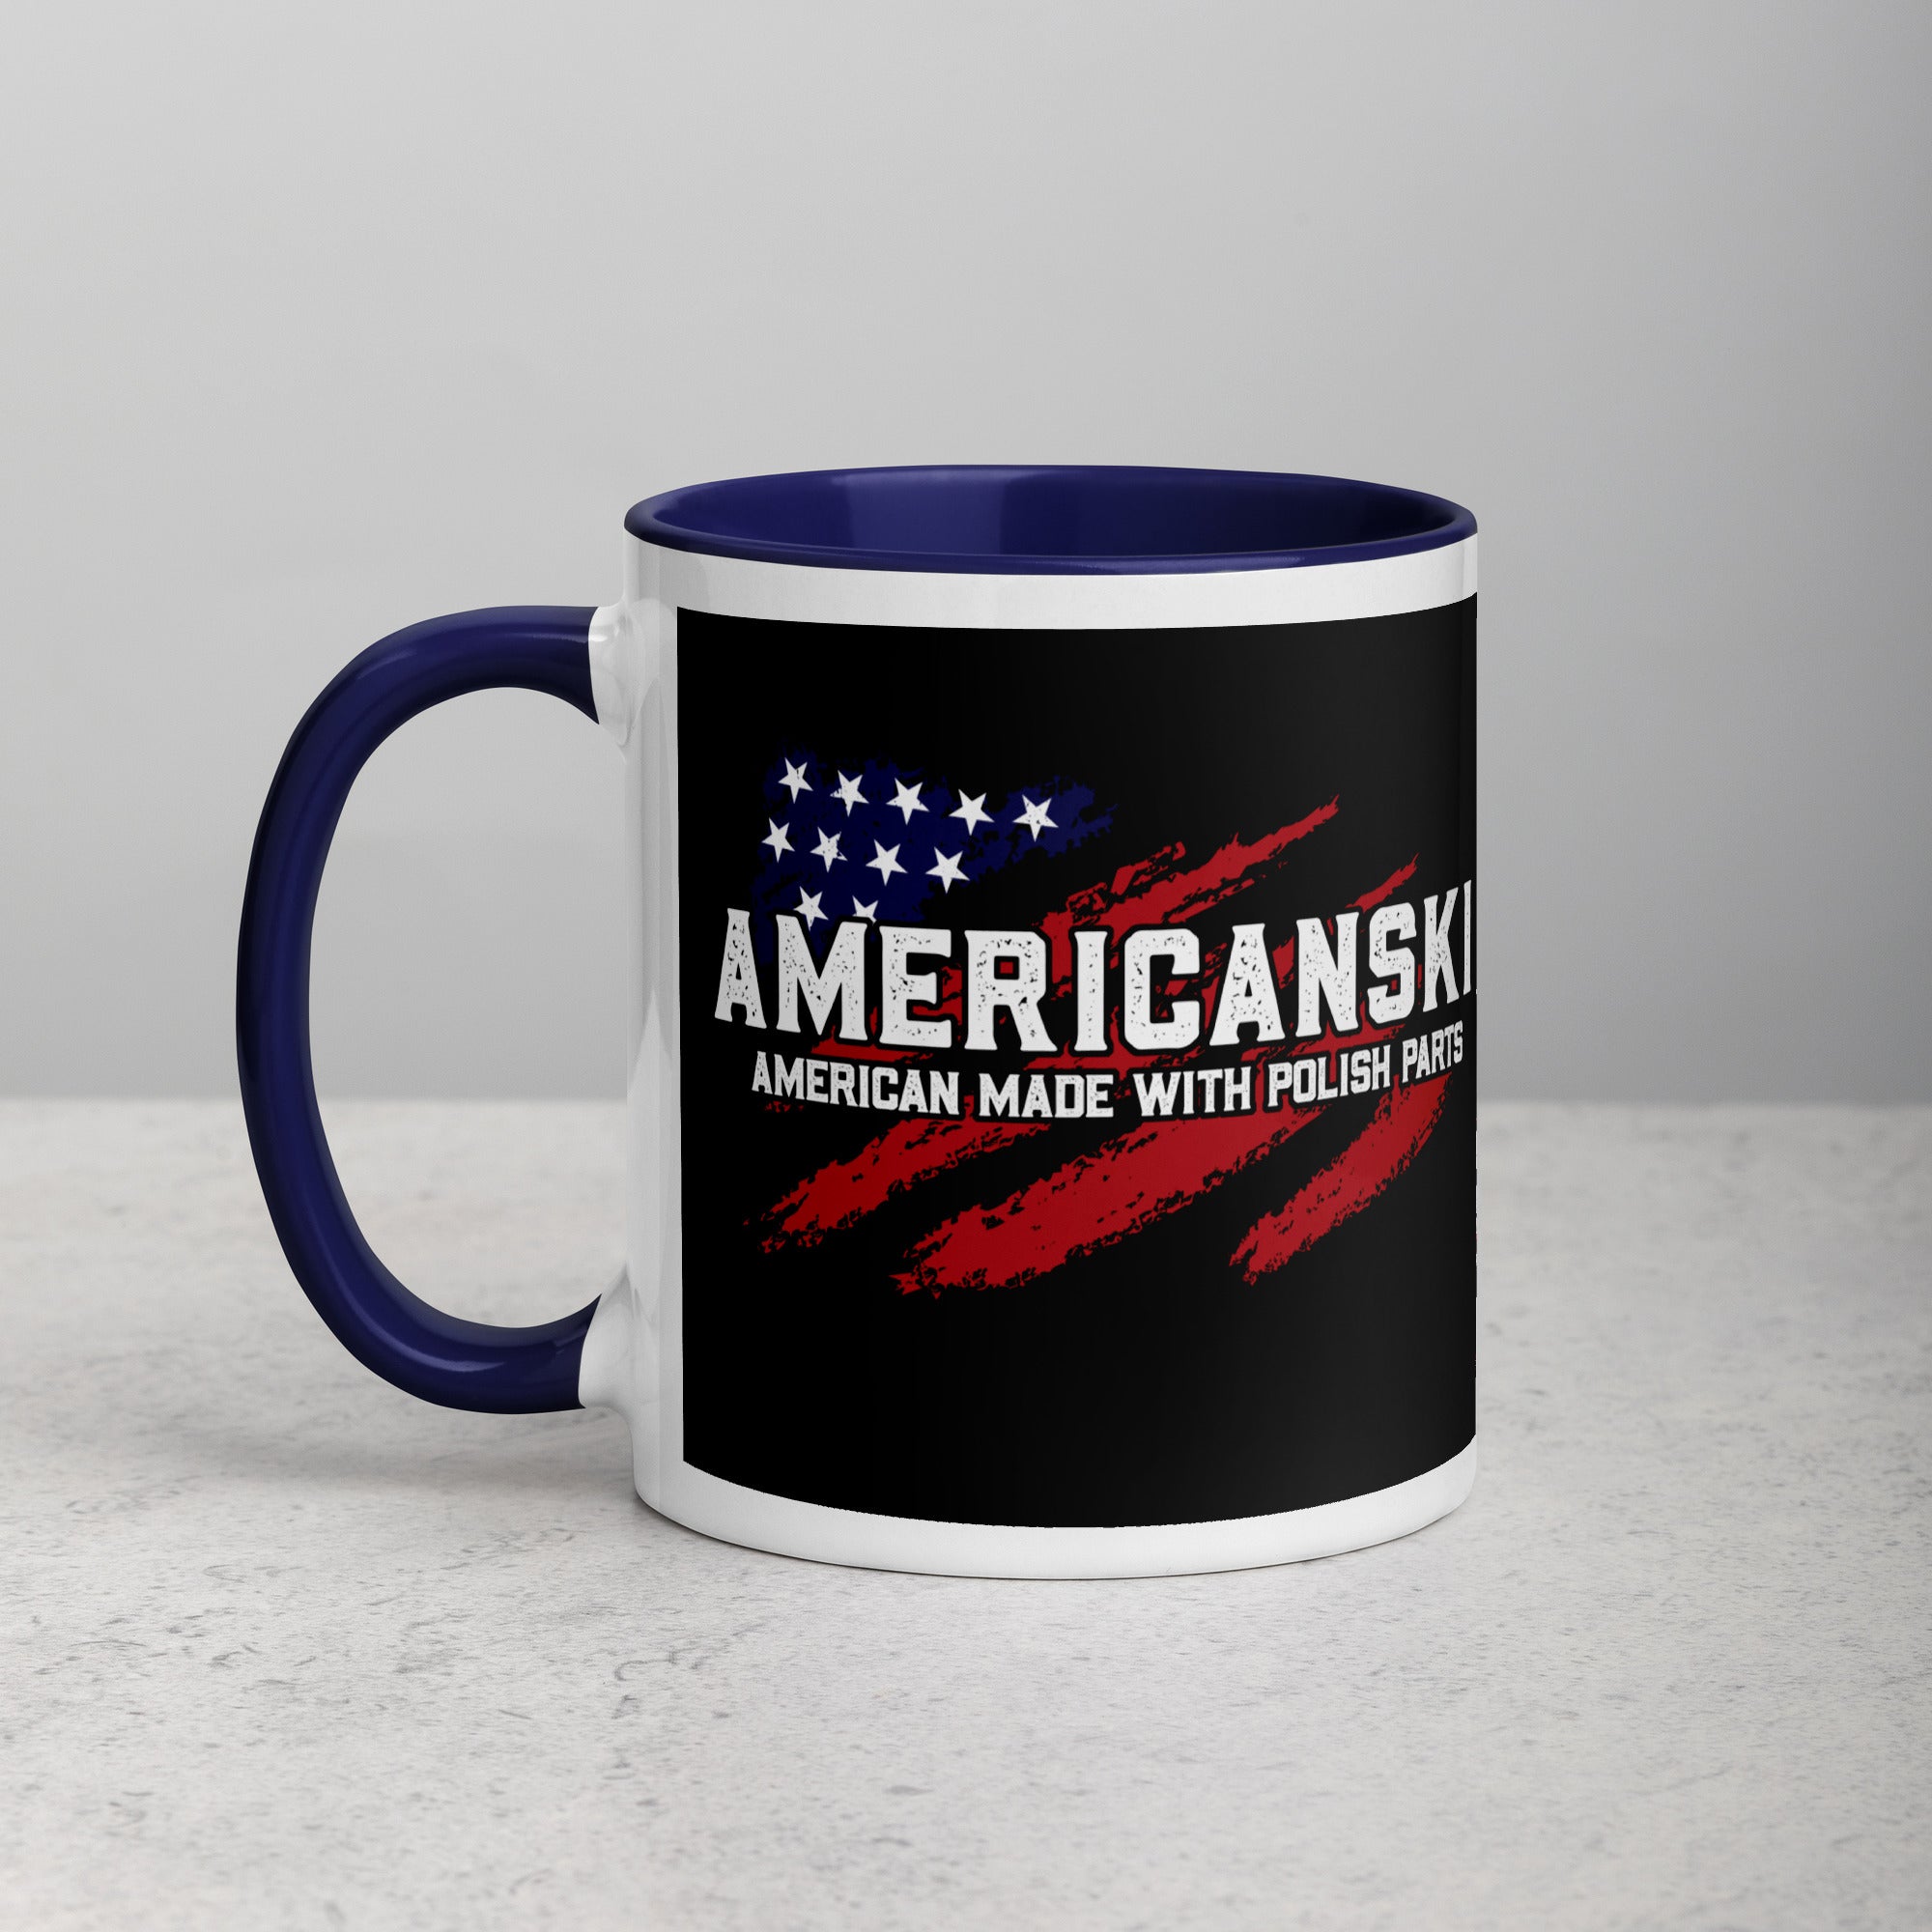 Americanski Coffee Mug with Color Inside  Polish Shirt Store Dark Blue 11 oz 